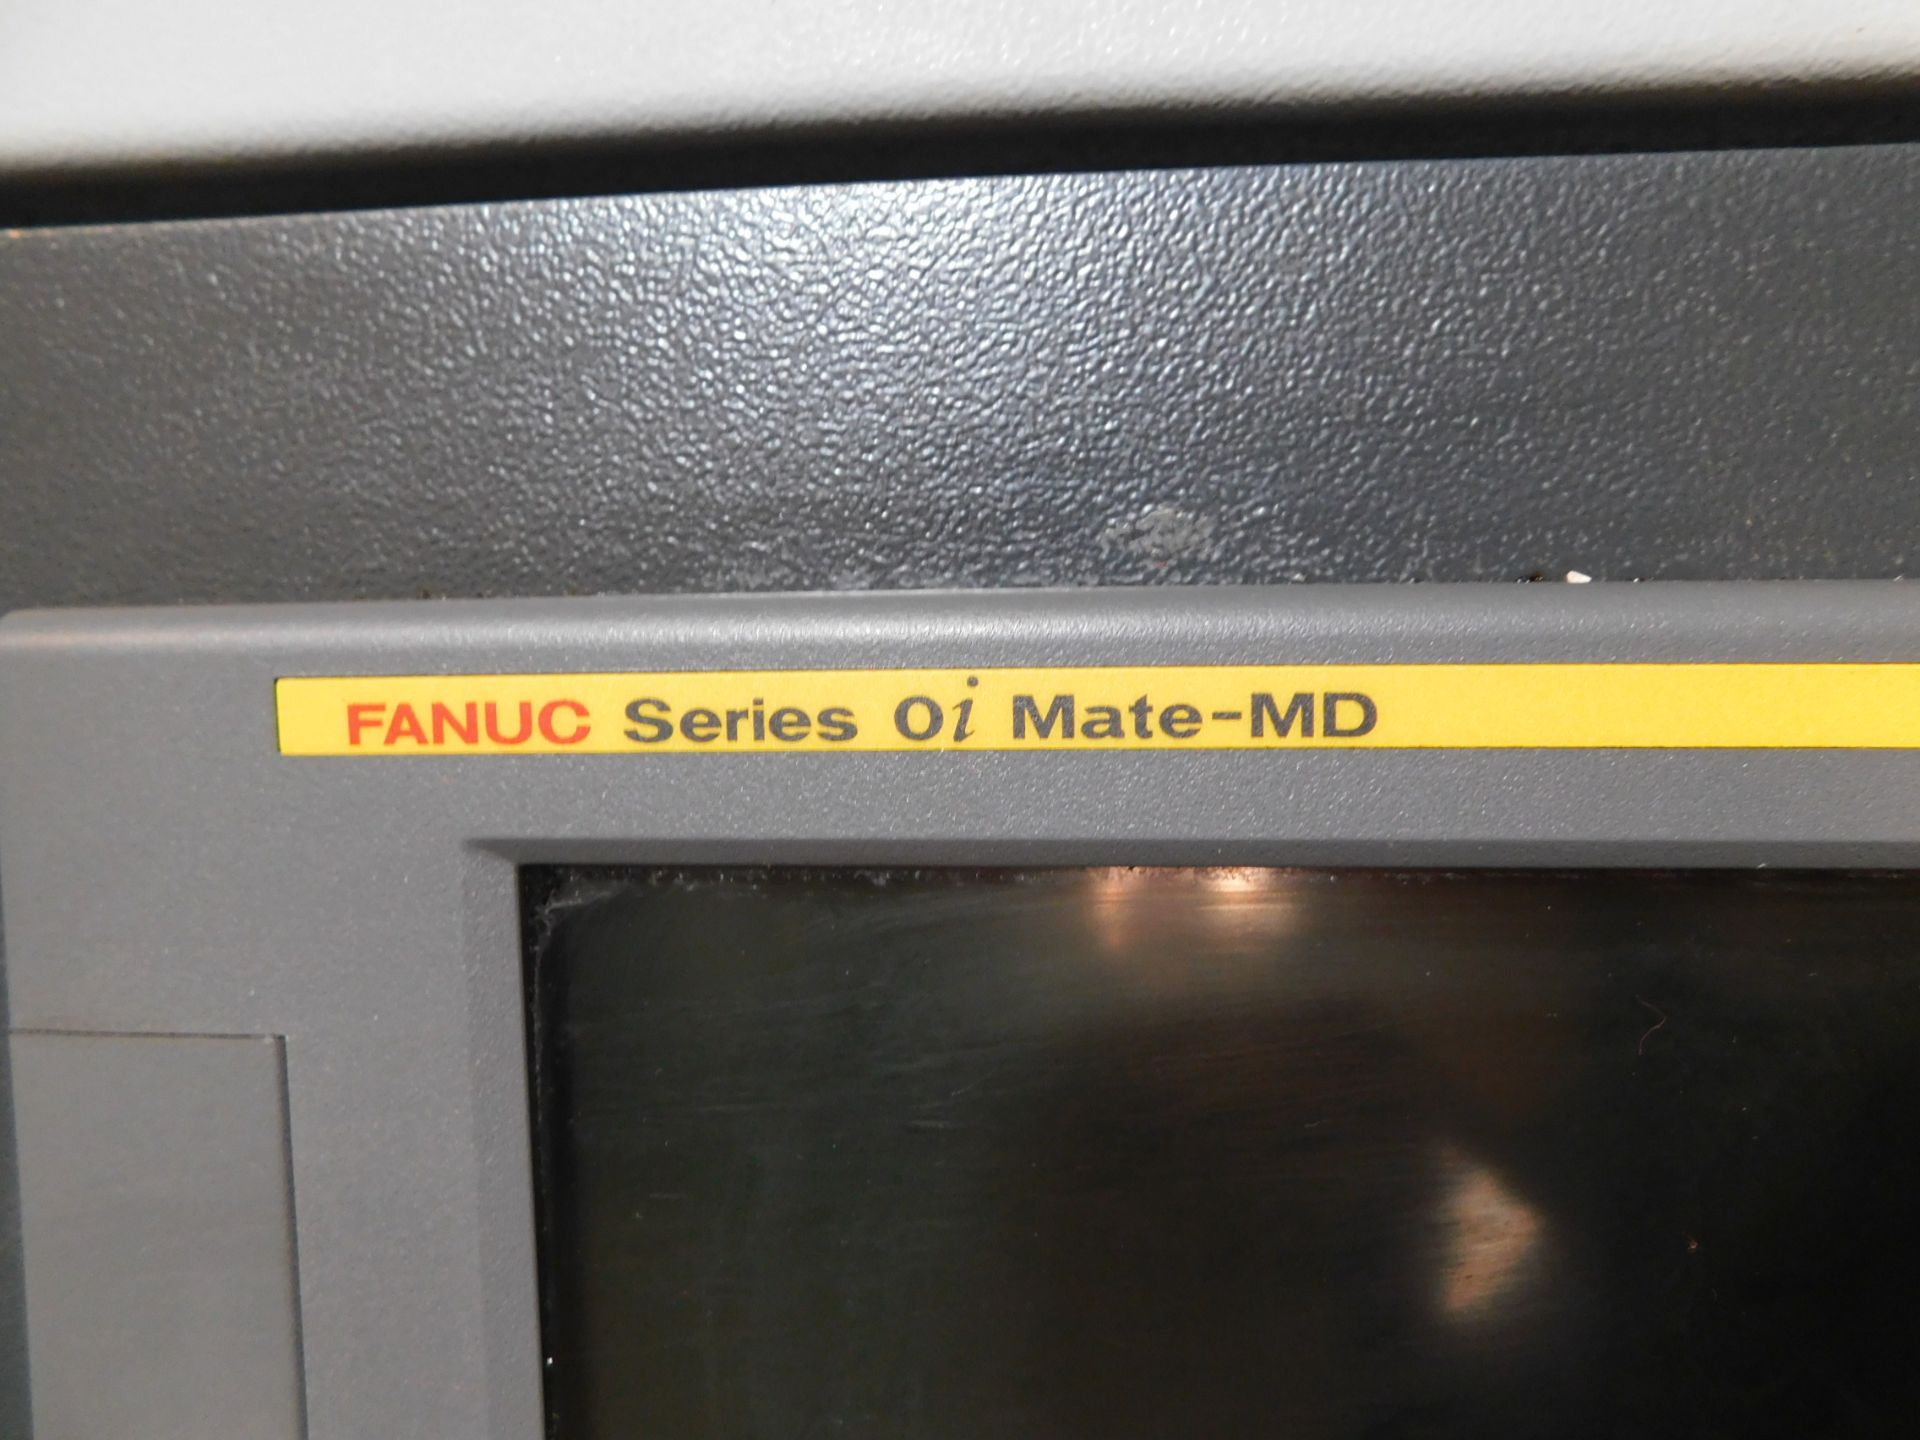 Sharp Model SV-2414S-iF CNC Vertical Machining Center, s/n 6062, New 2015, Fanuc 0i-Mate MD CNC - Image 7 of 12